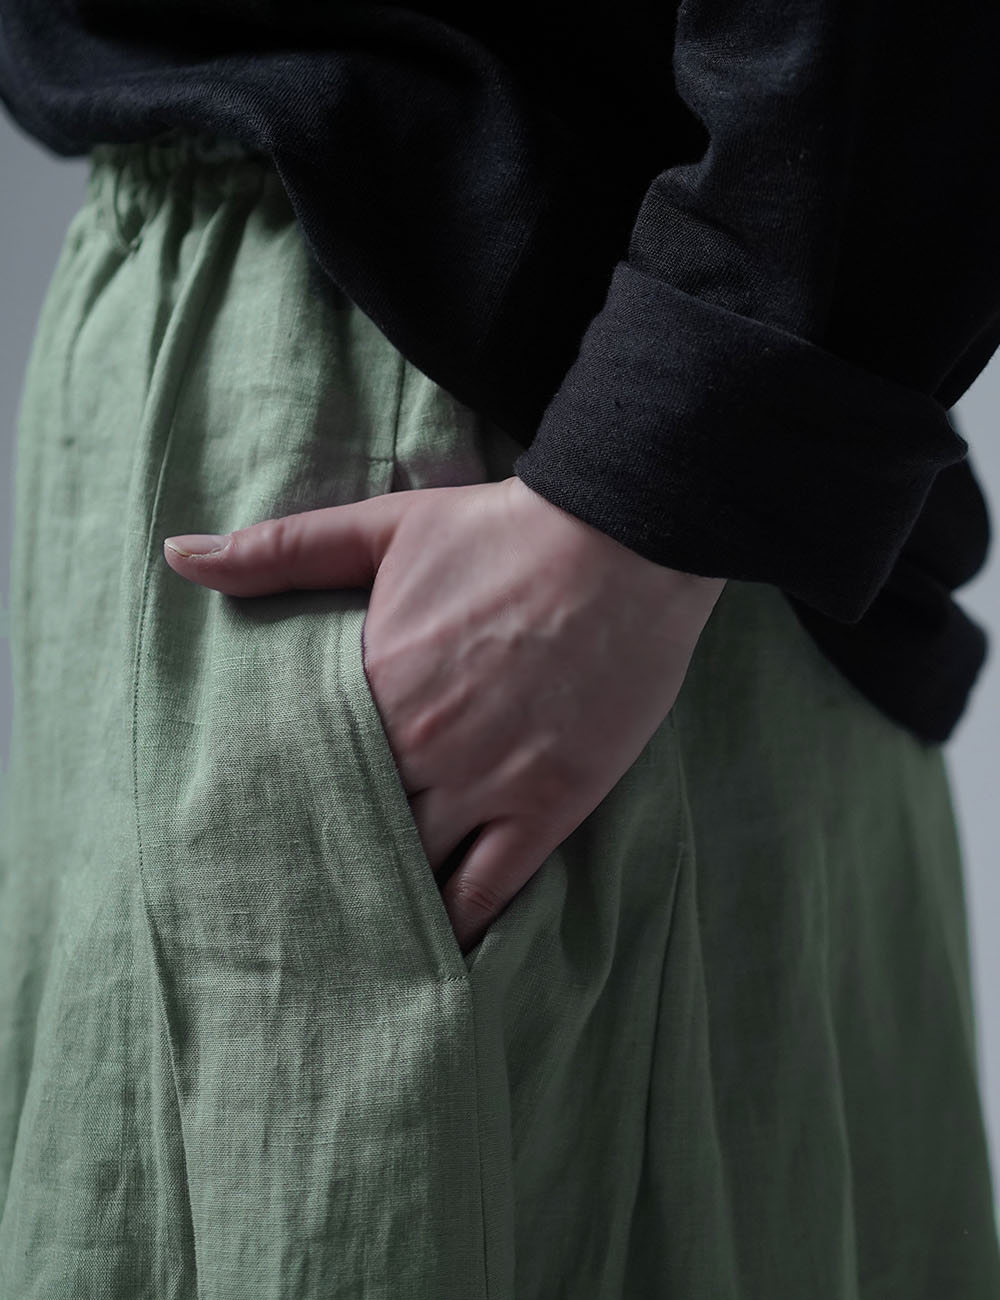 【wafu】Linen Pants 袴(はかま)パンツ/青磁鼠(せいじねず) b002k-snz1